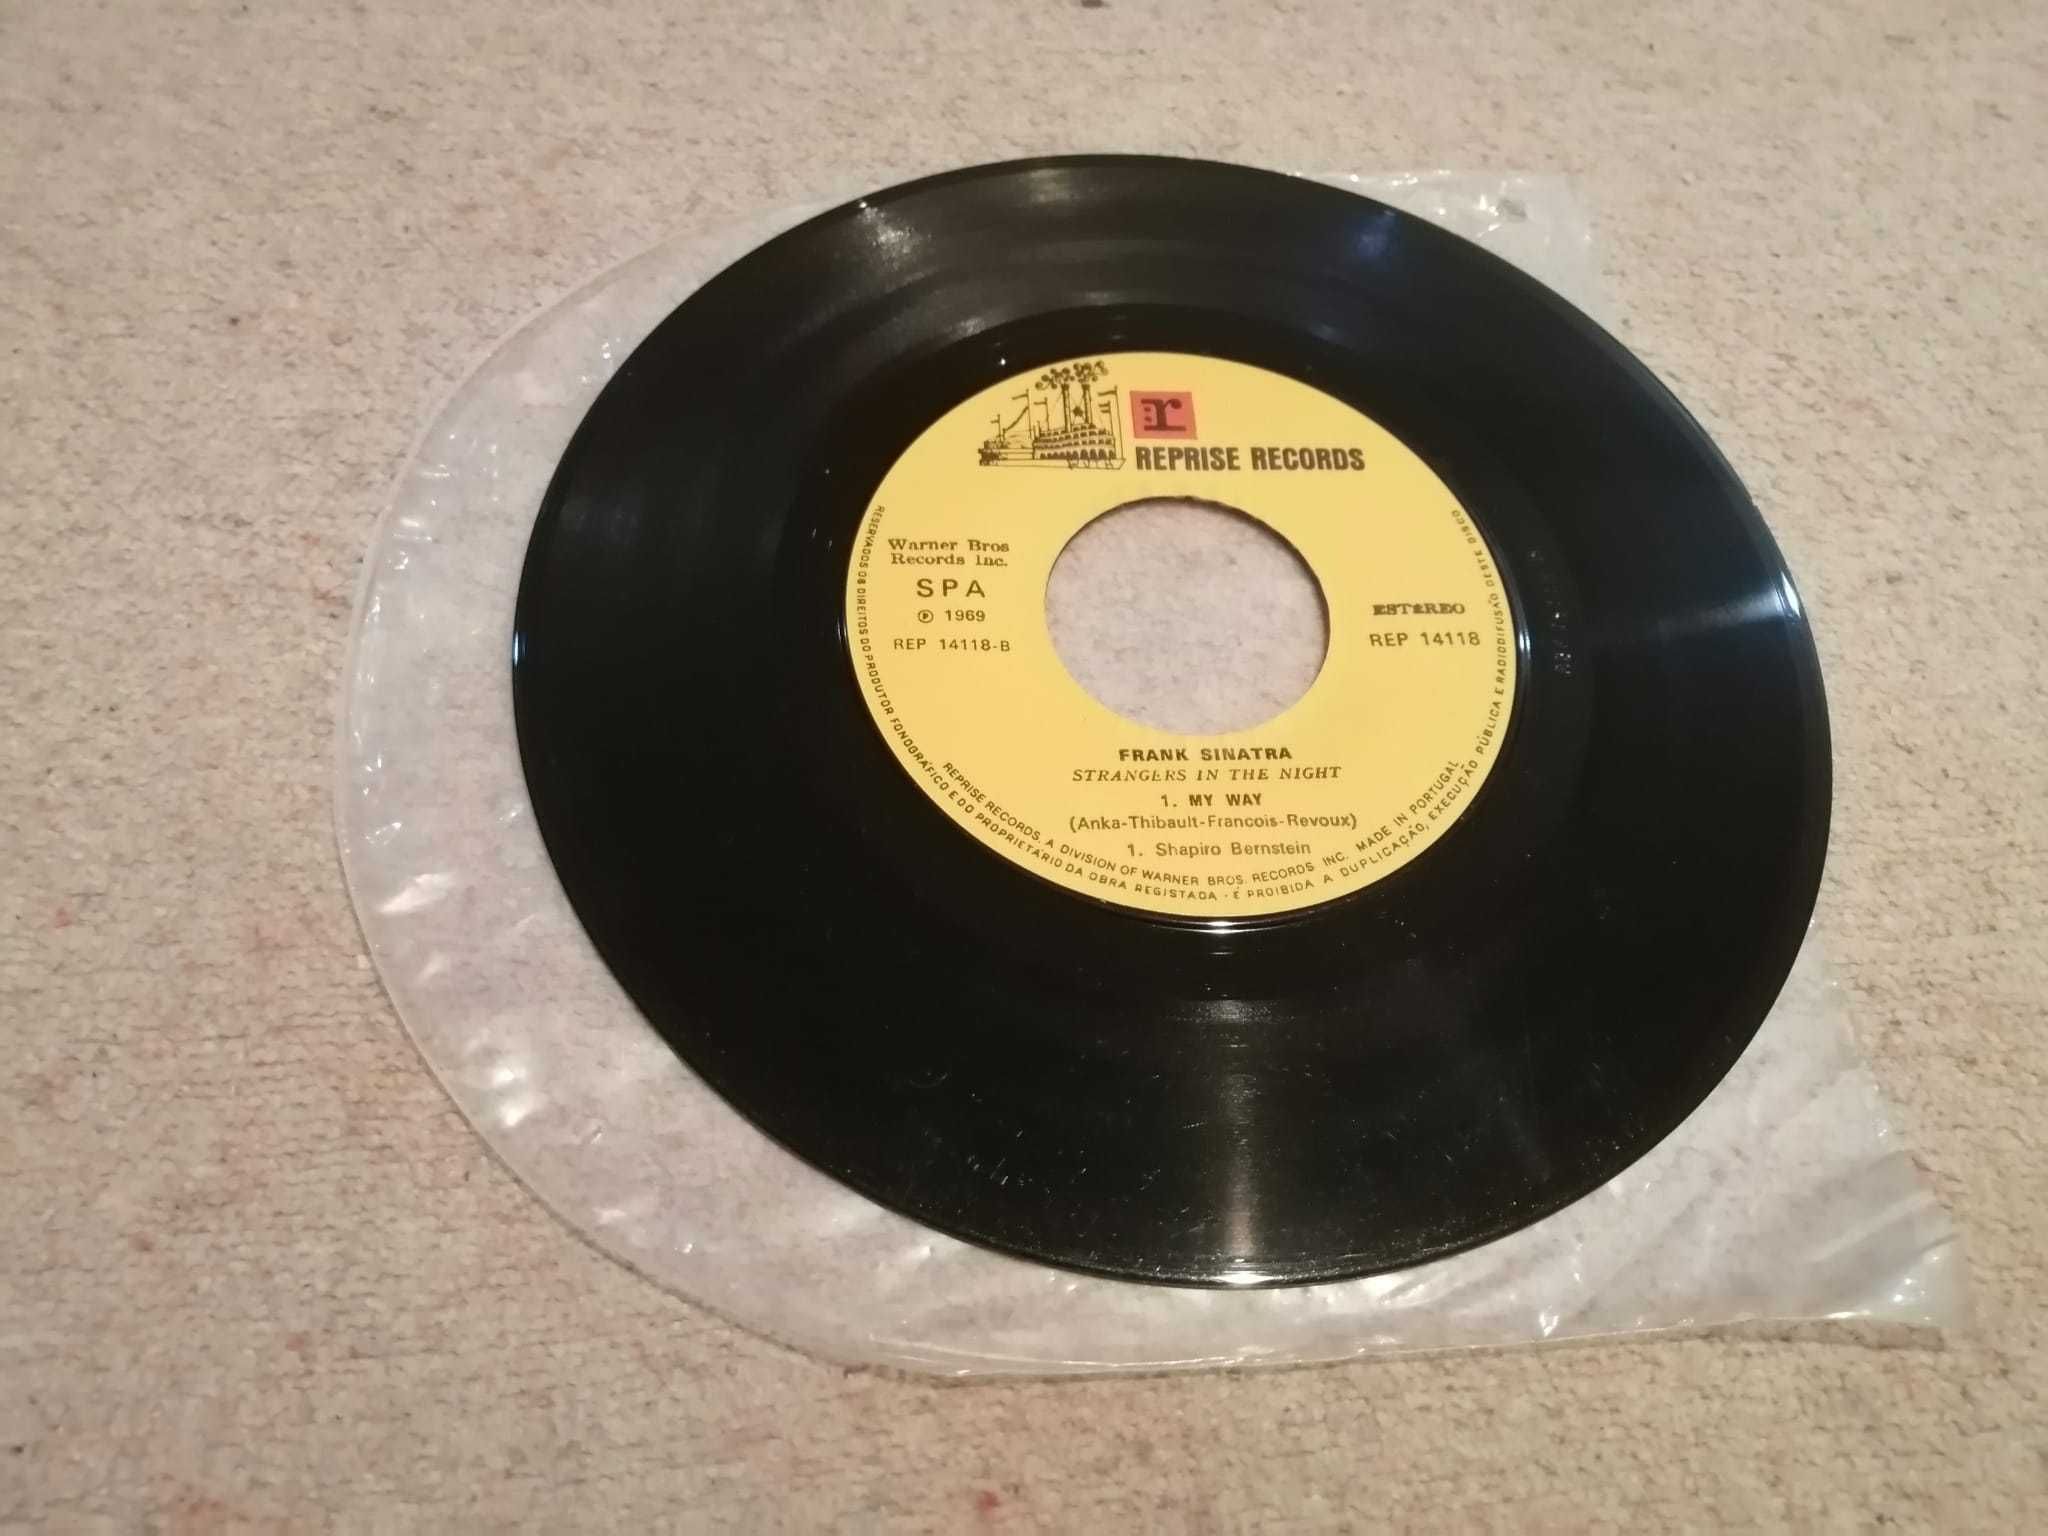 Disco Vinil single, Frank Sinatra, Strangers in the night, My way,1969